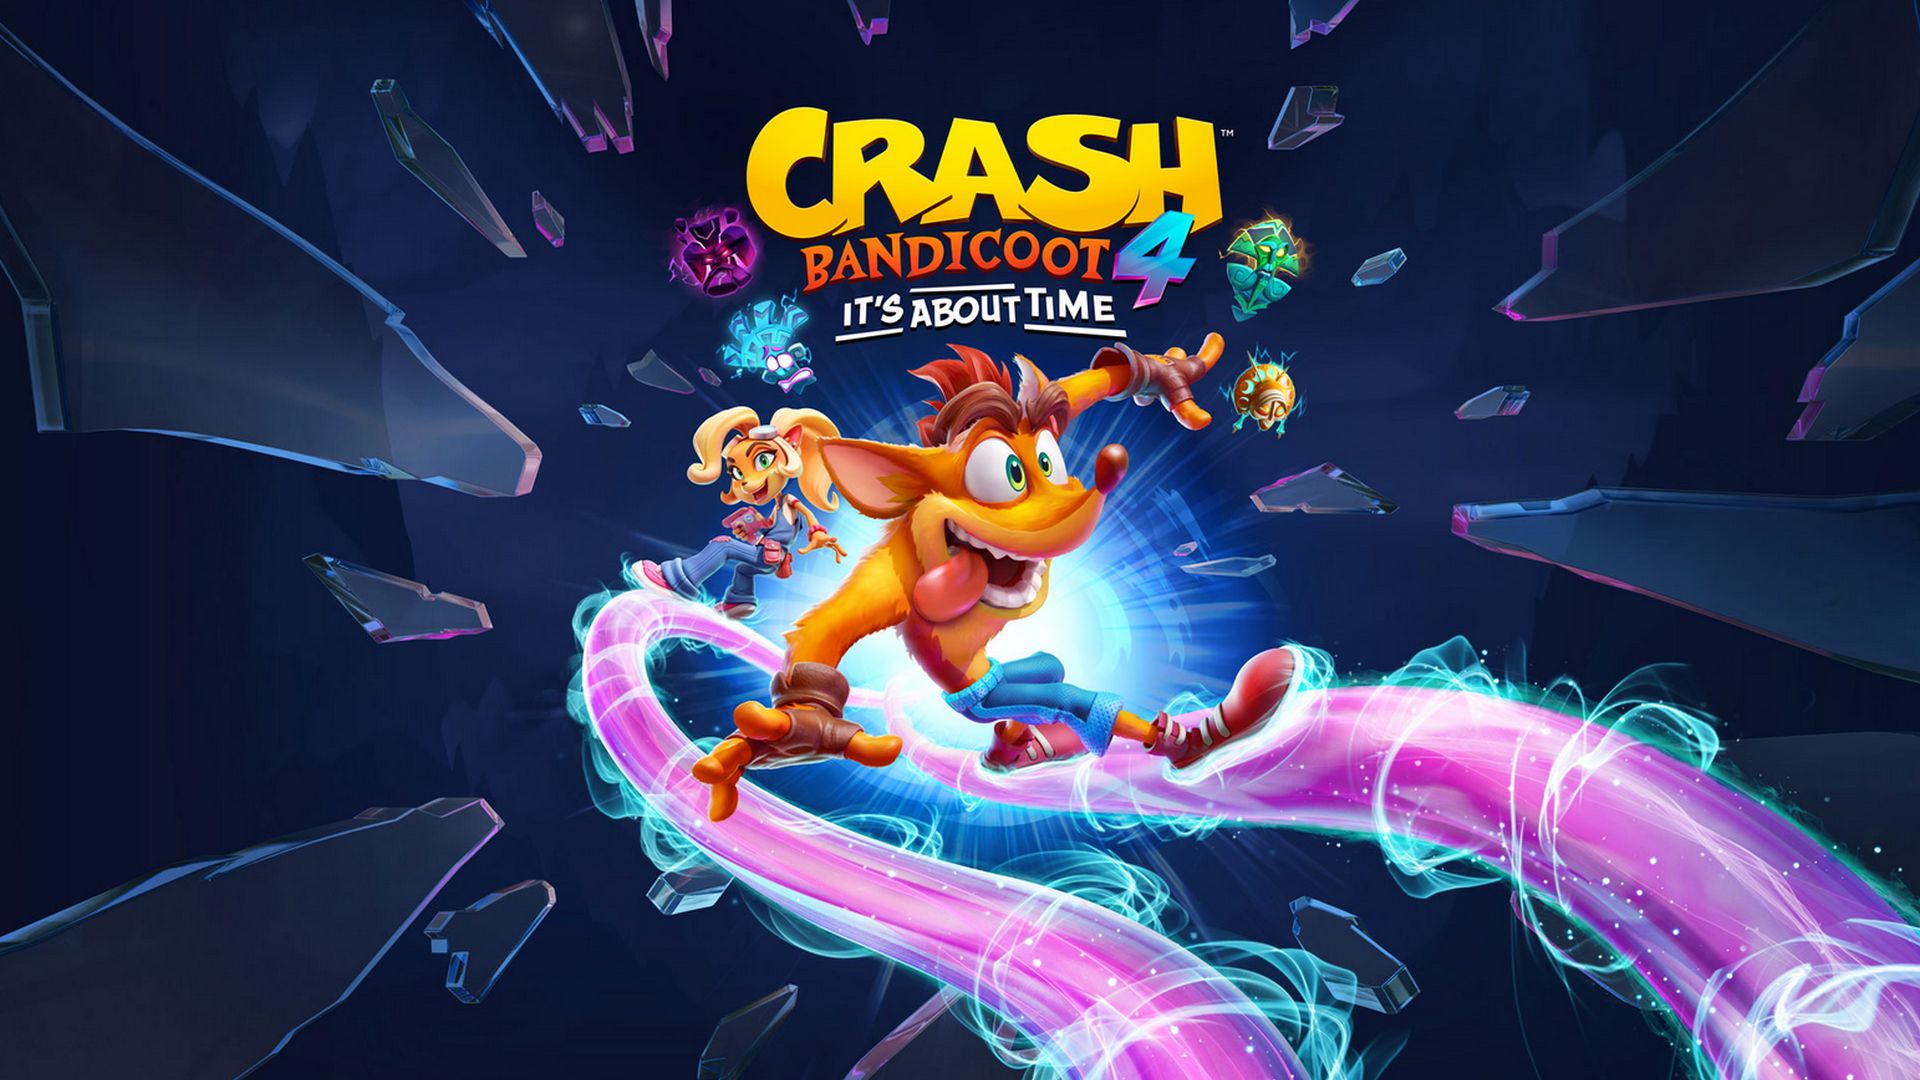 Crash Bandicoot 4 Wasal iż-żmien